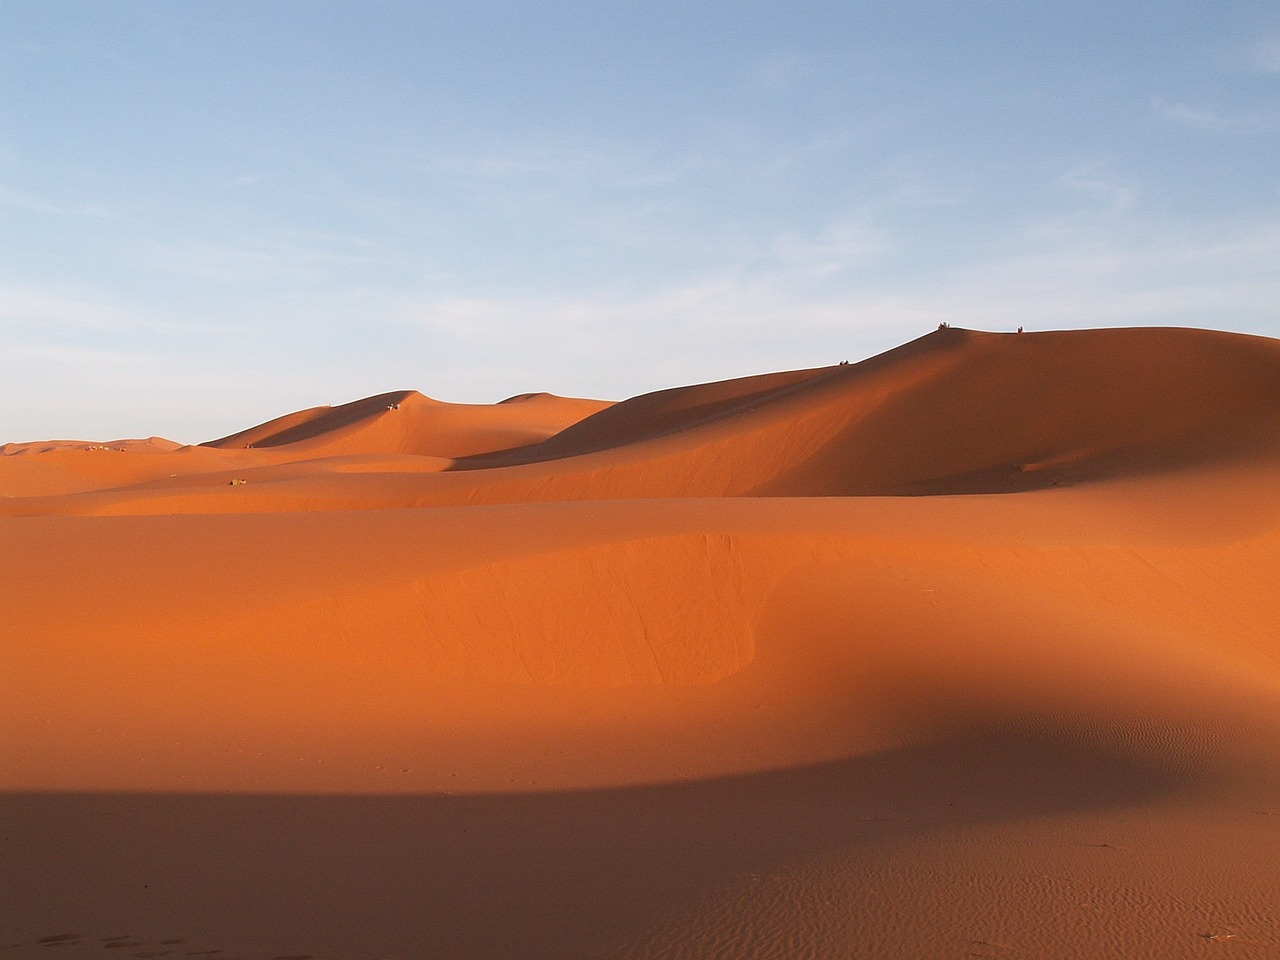 Dunes in the desert